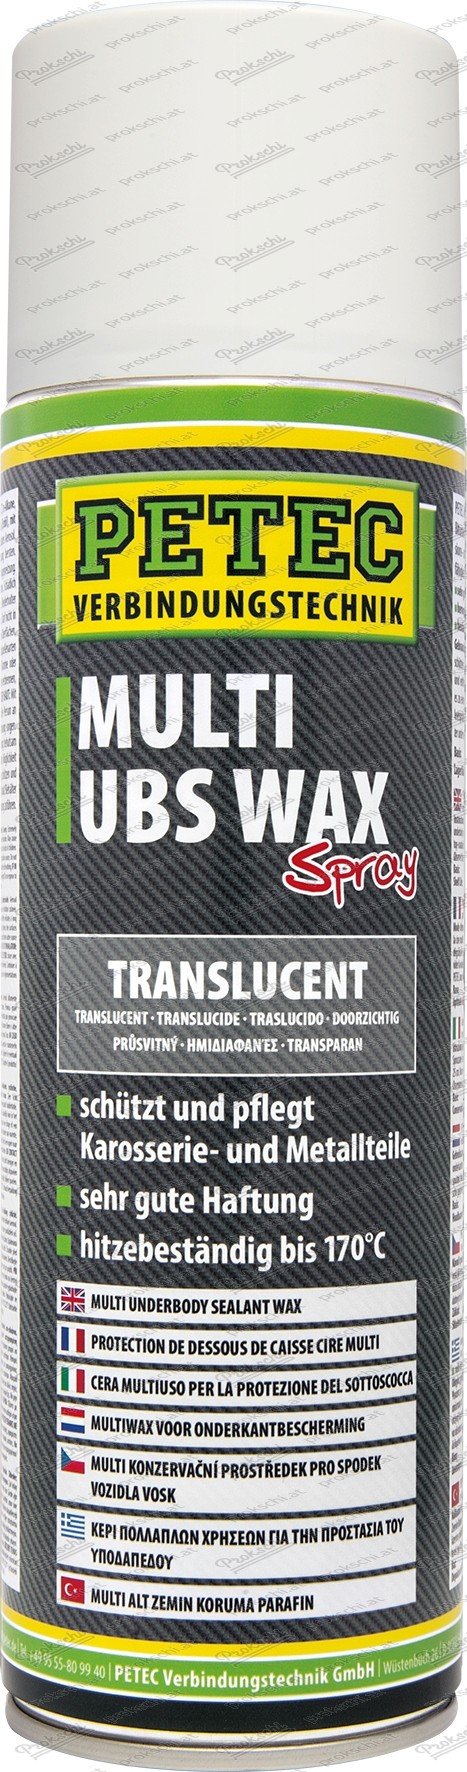 Multi UBS Wax - translucent - 500 ml Spray